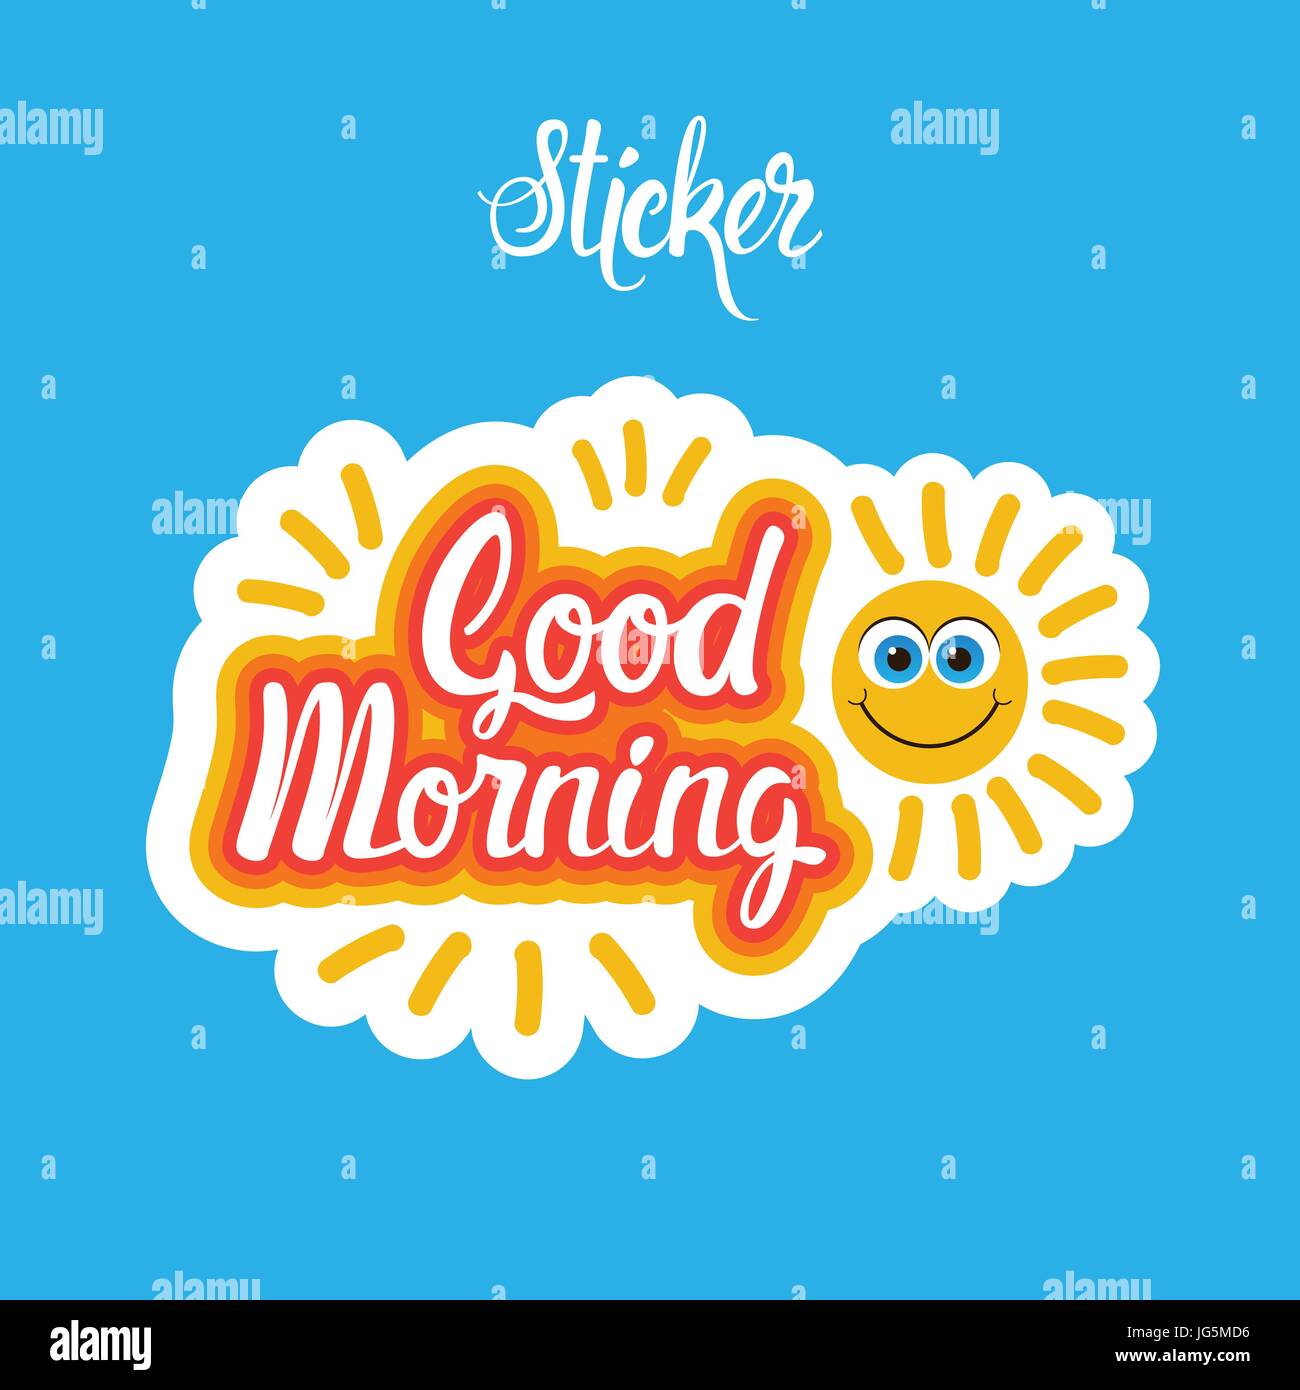 Good Morning Sticker Social Media Network Message Badges Design Stock ...